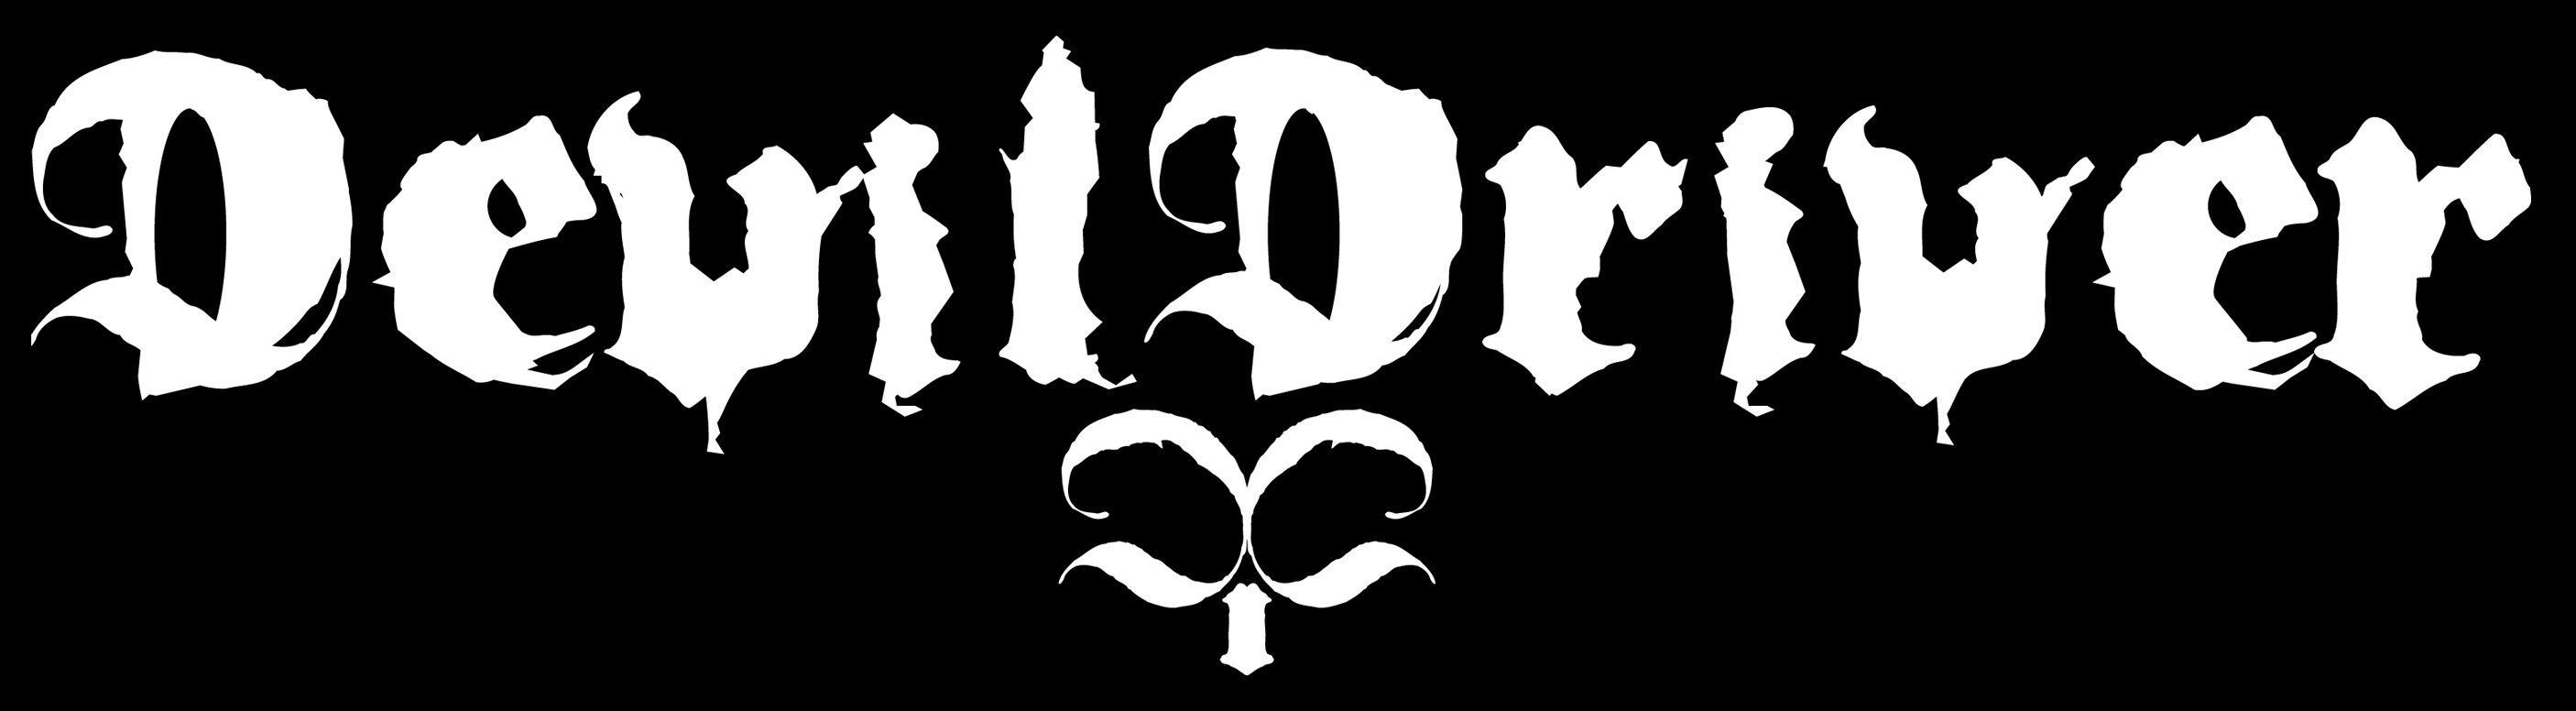 Devildriver - Logo